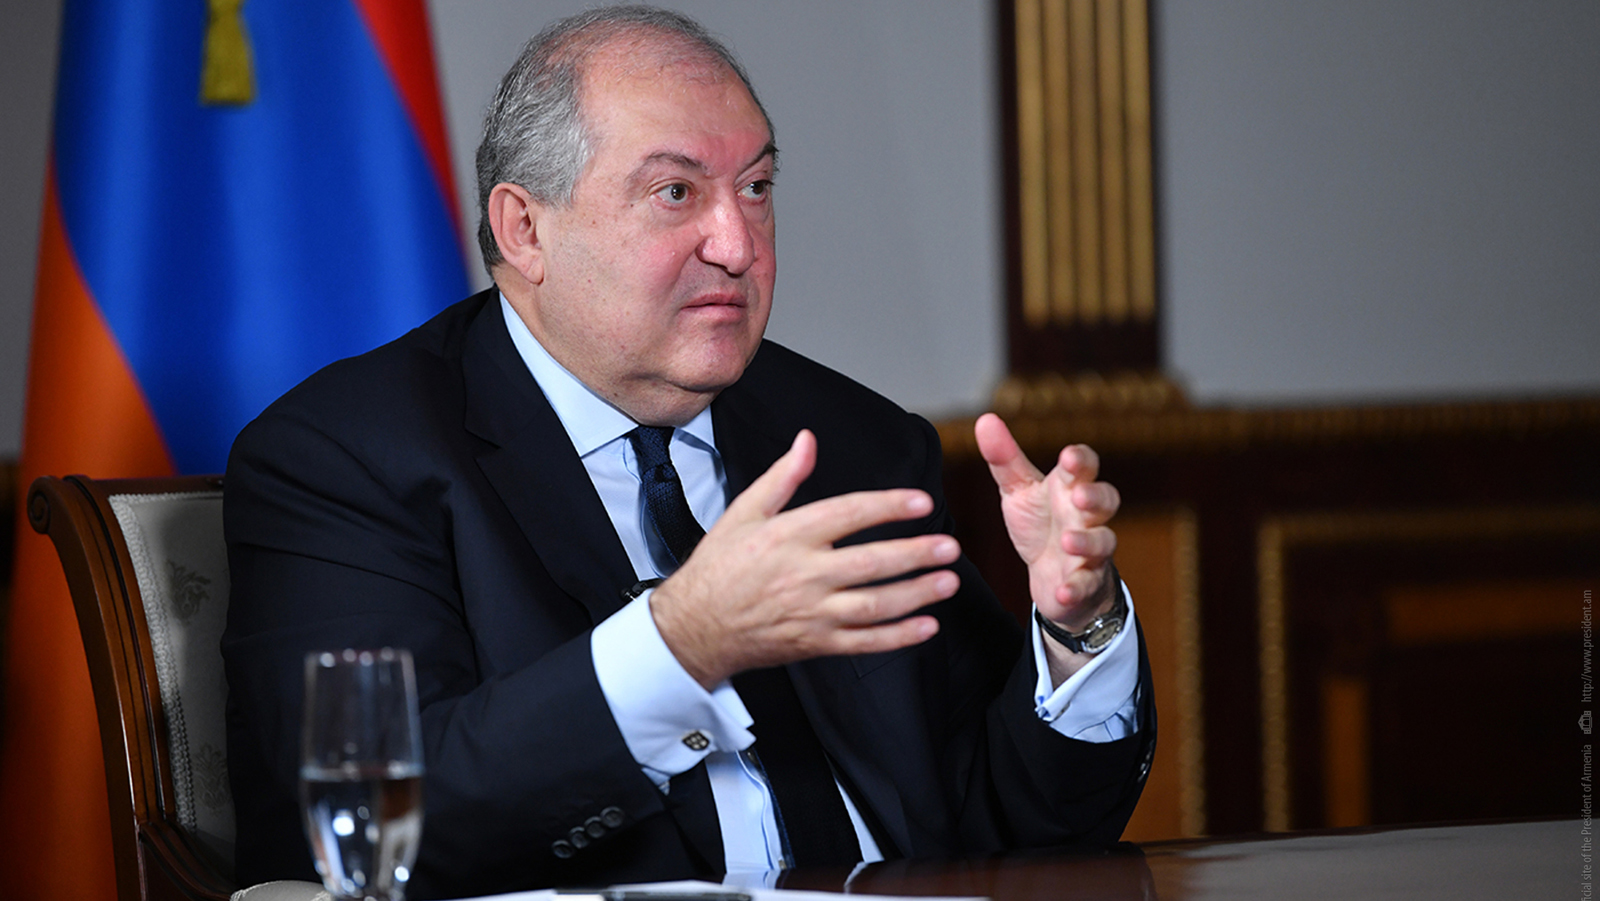 Президент Армении Армен Саркисян уходит в отставку